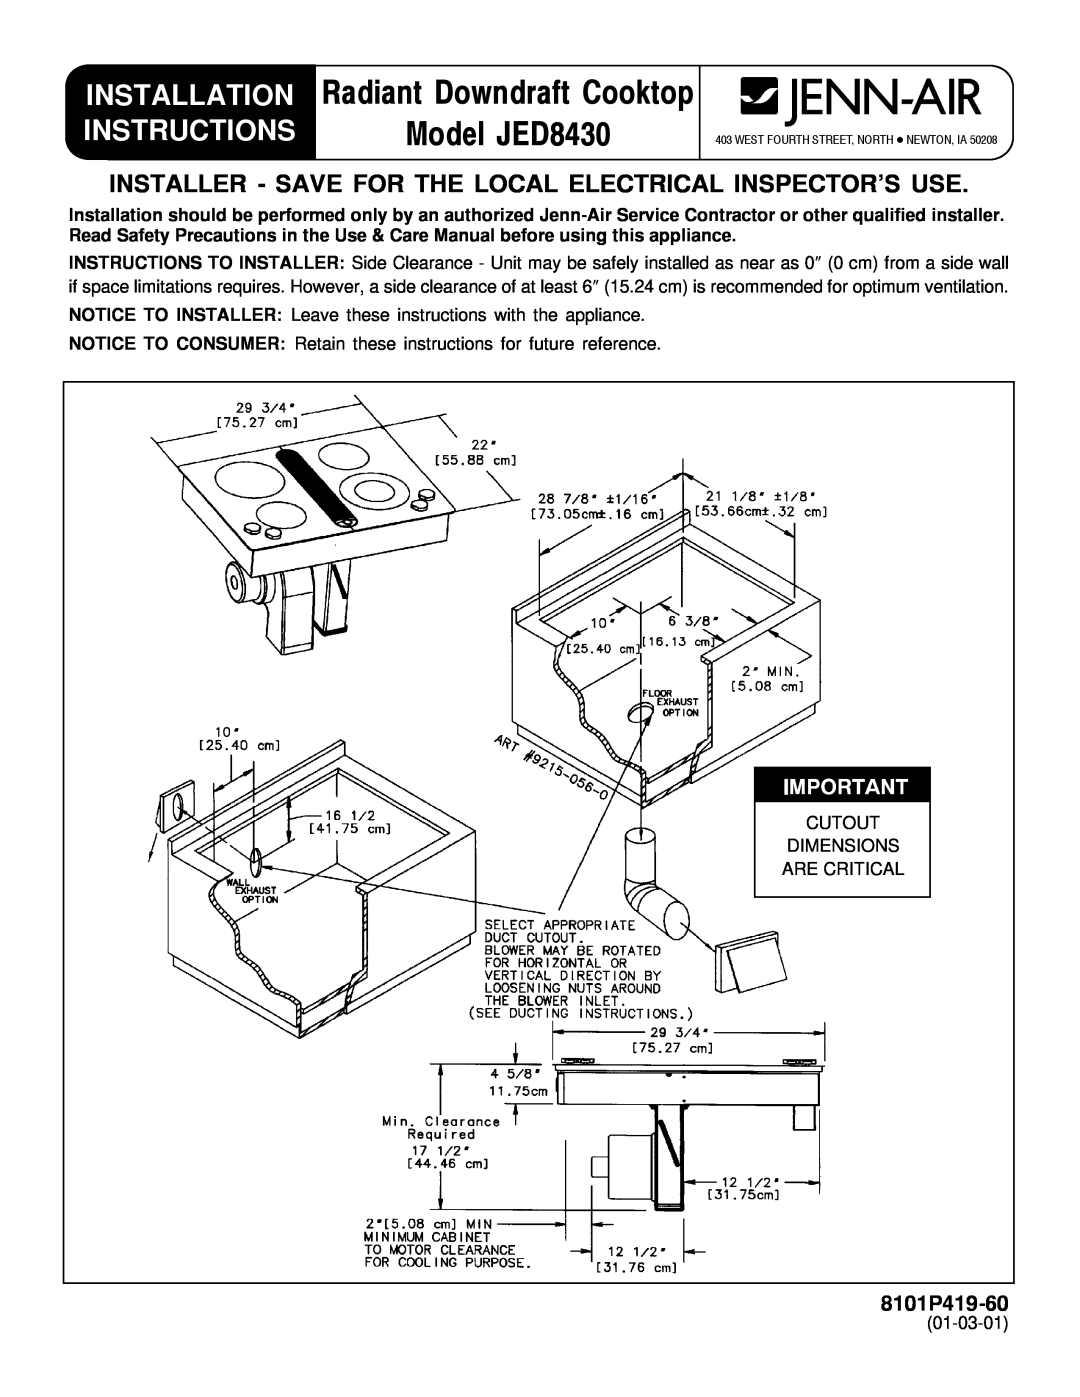 Jenn-Air installation instructions Installation, Radiant Downdraft Cooktop, Instructions, Model JED8430, 8101P419-60 